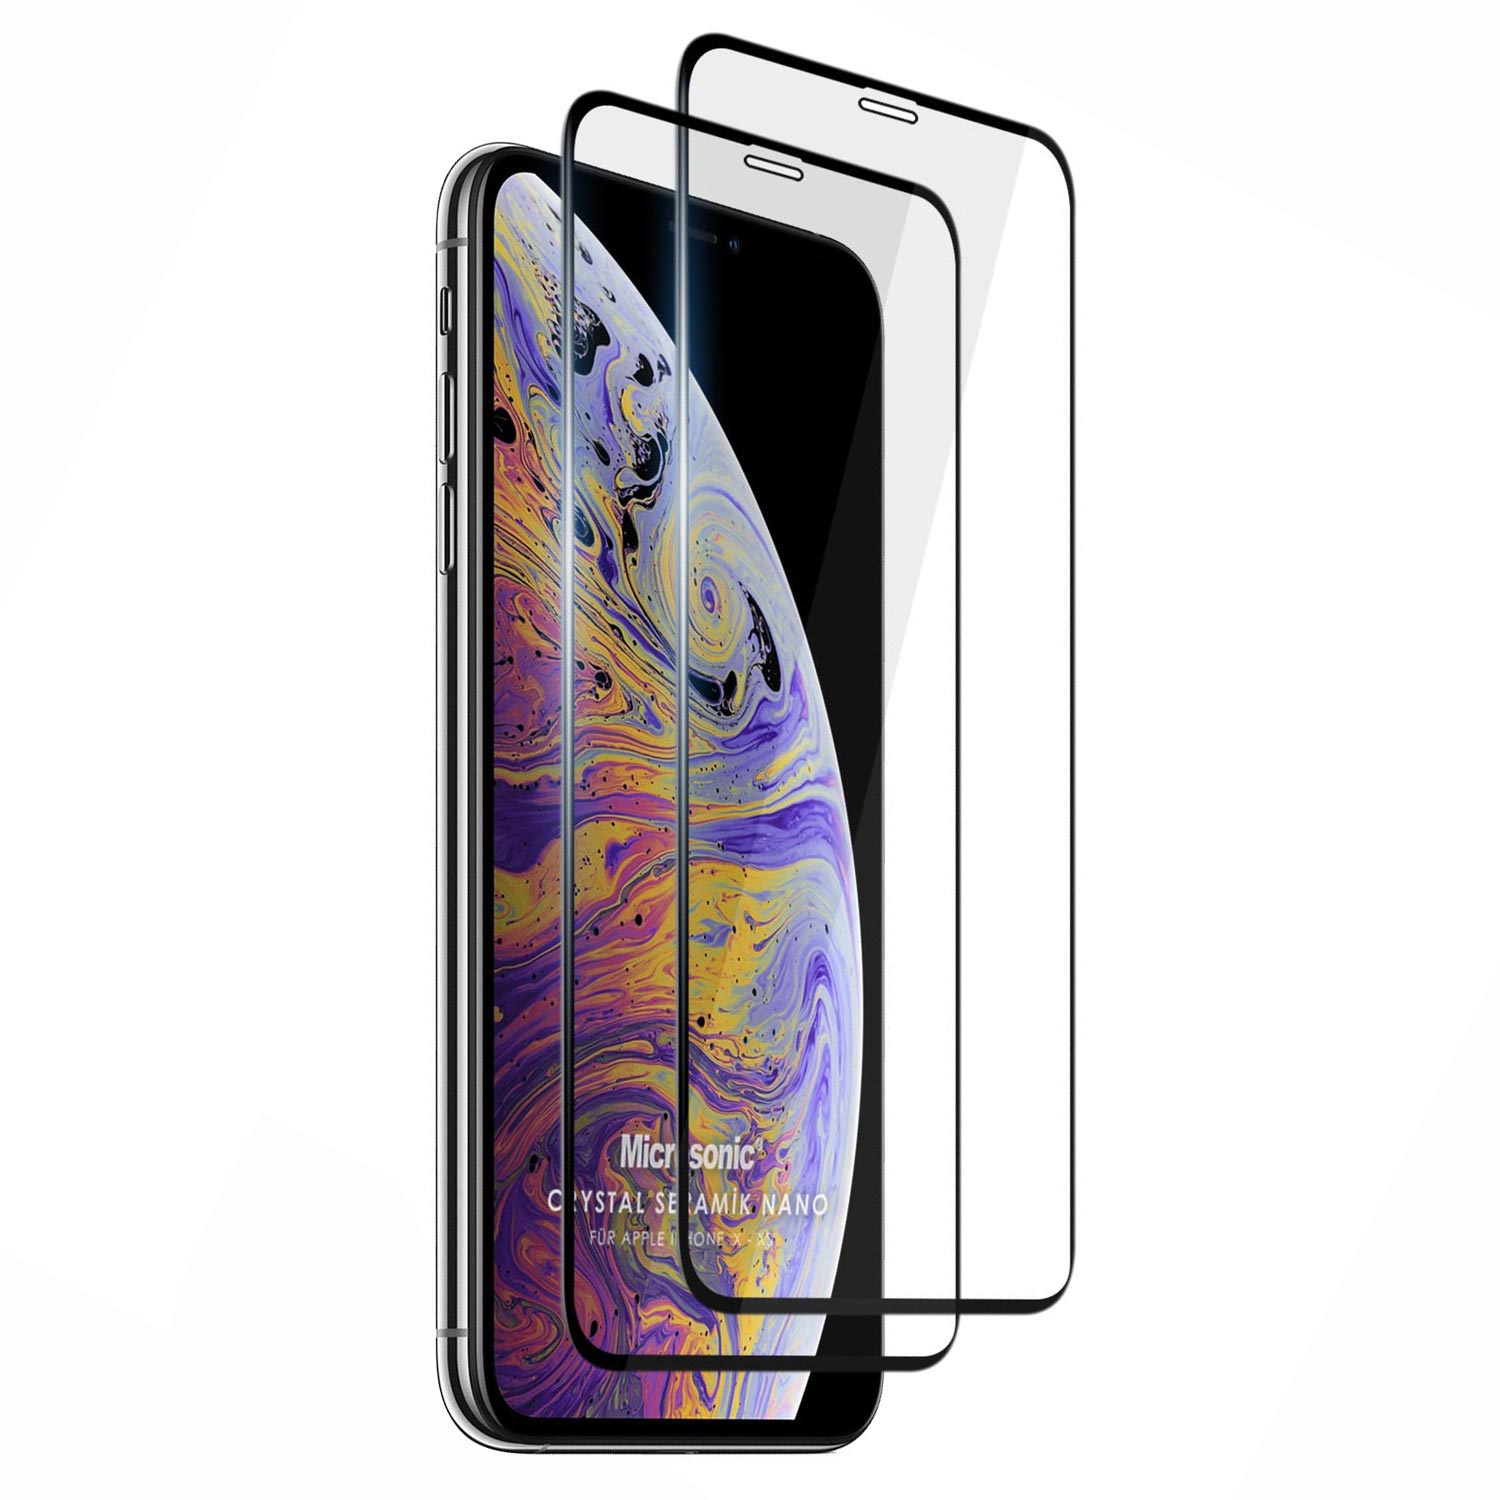 Microsonic Apple iPhone X Crystal Seramik Nano Ekran Koruyucu Siyah 2 Adet